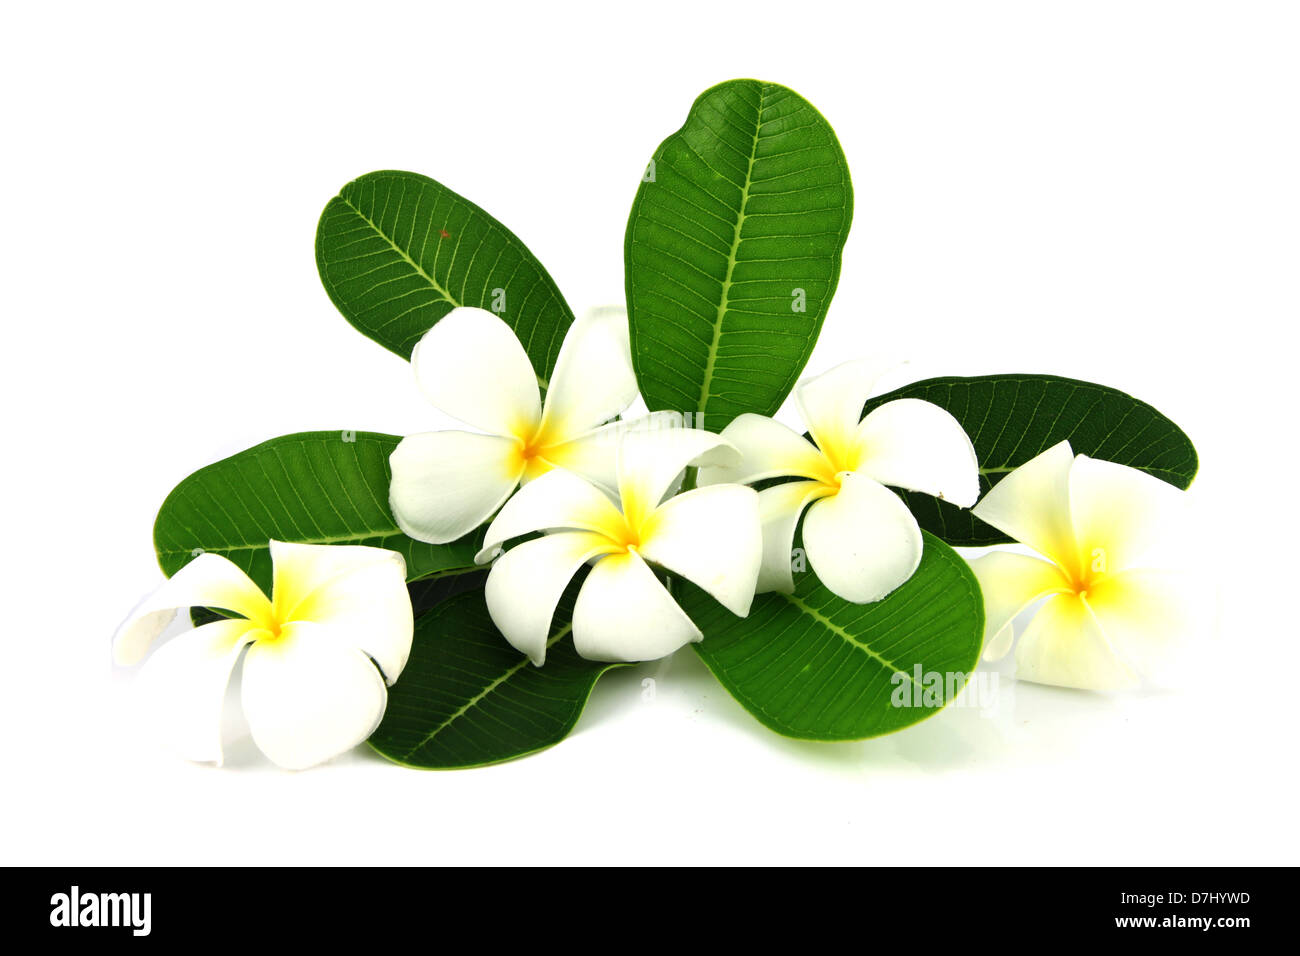 White frangipani and Green leaf on a white background. Stock Photo